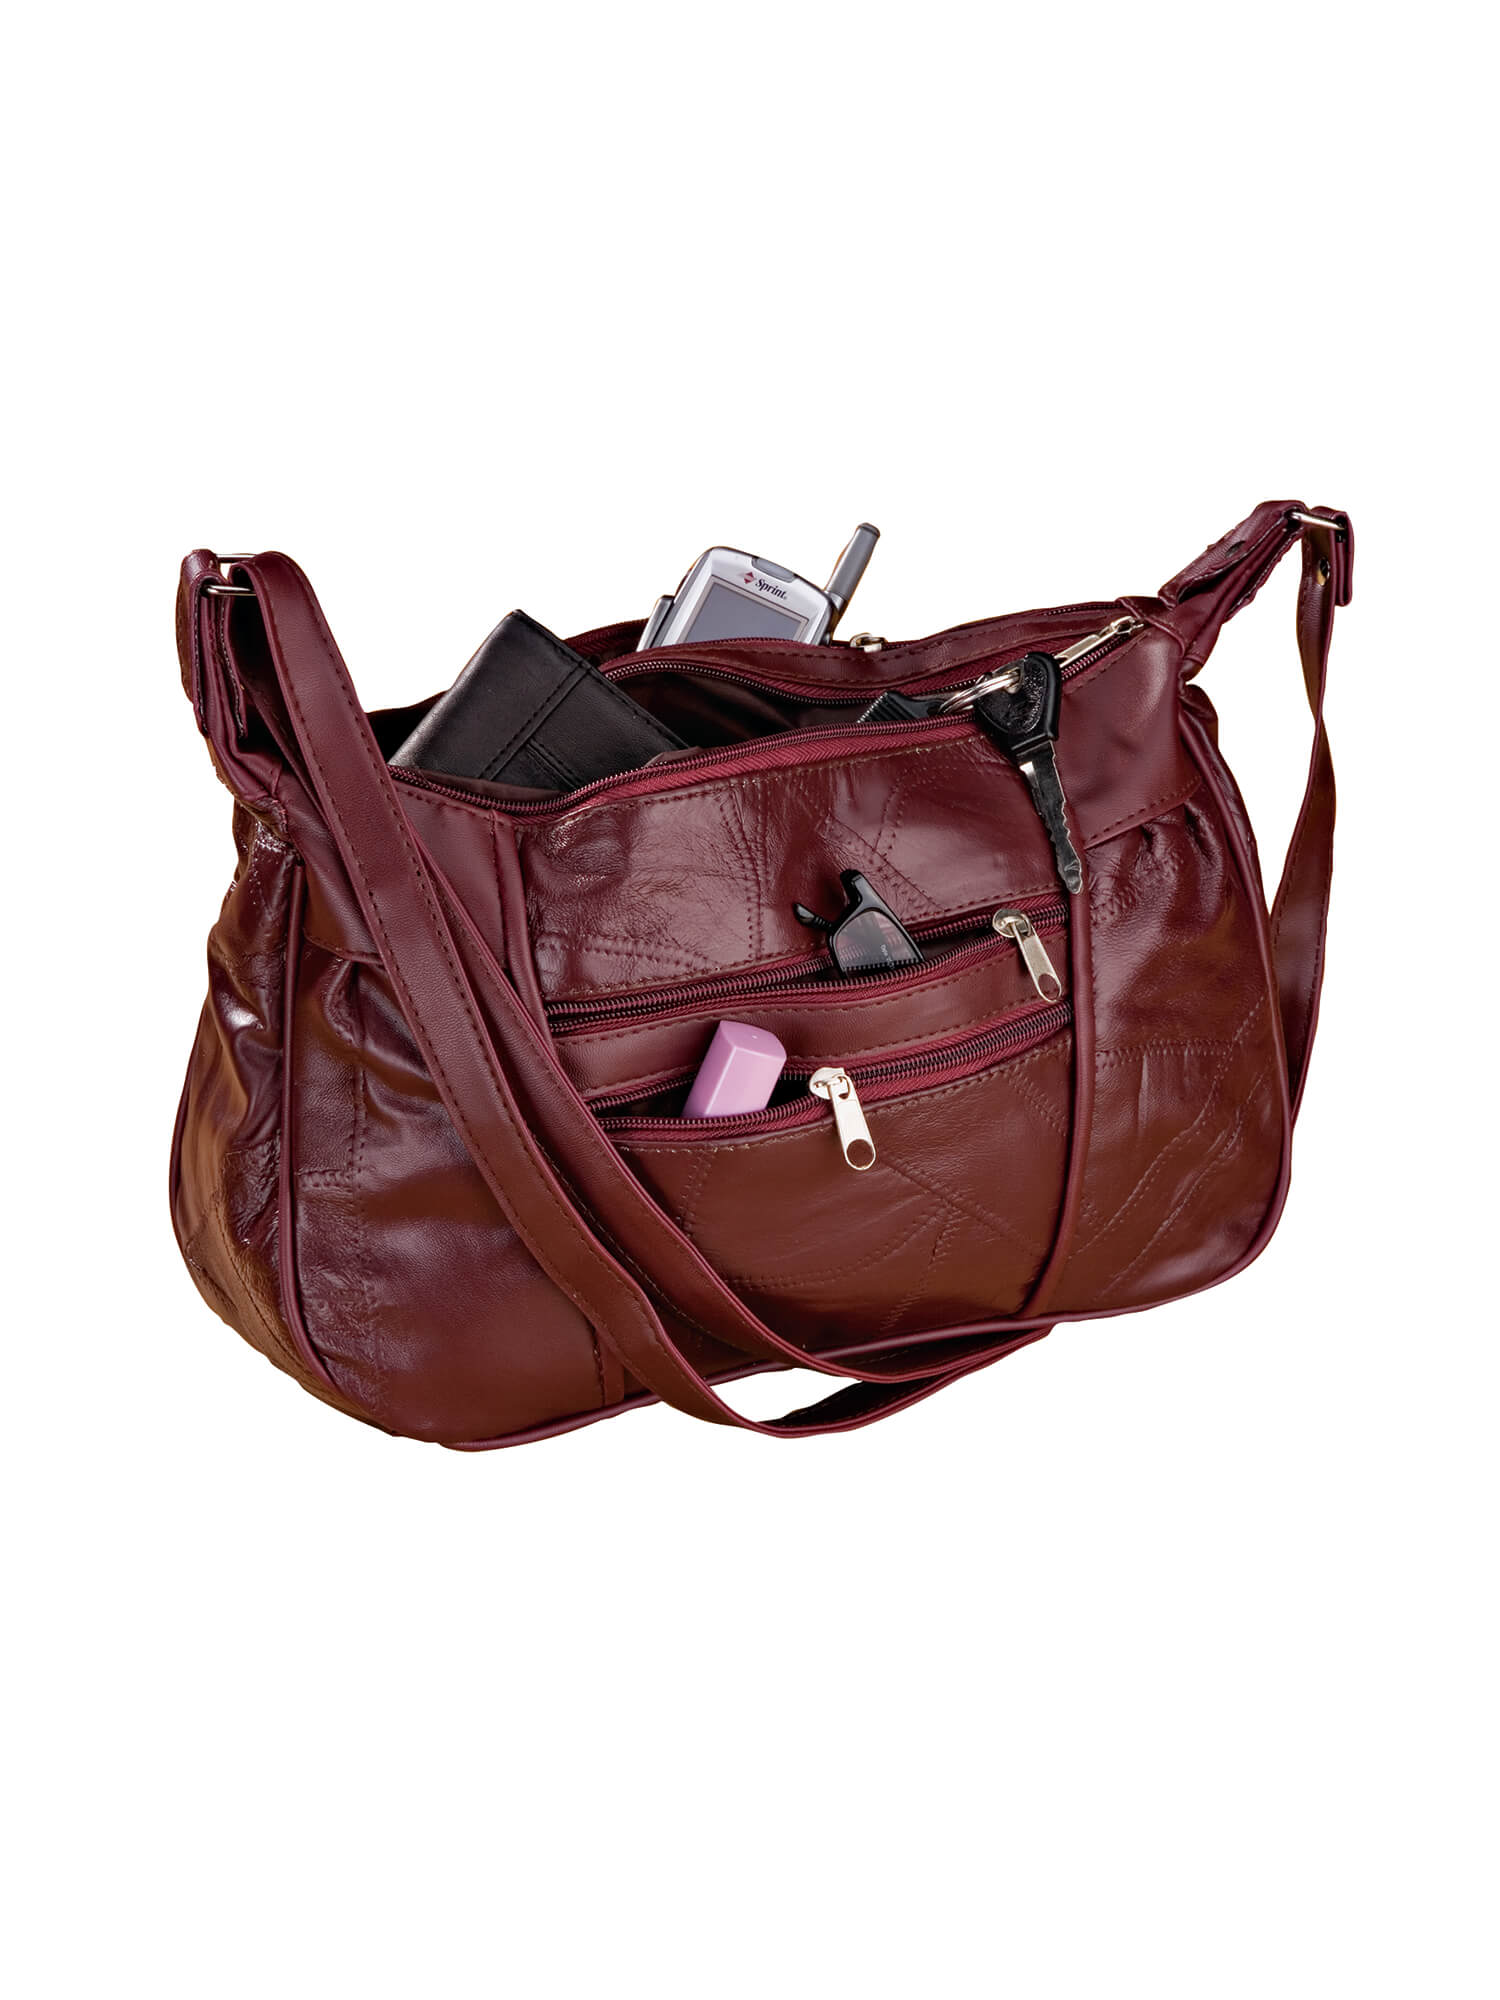 Burgundy Leather Handbag - Walmart.com